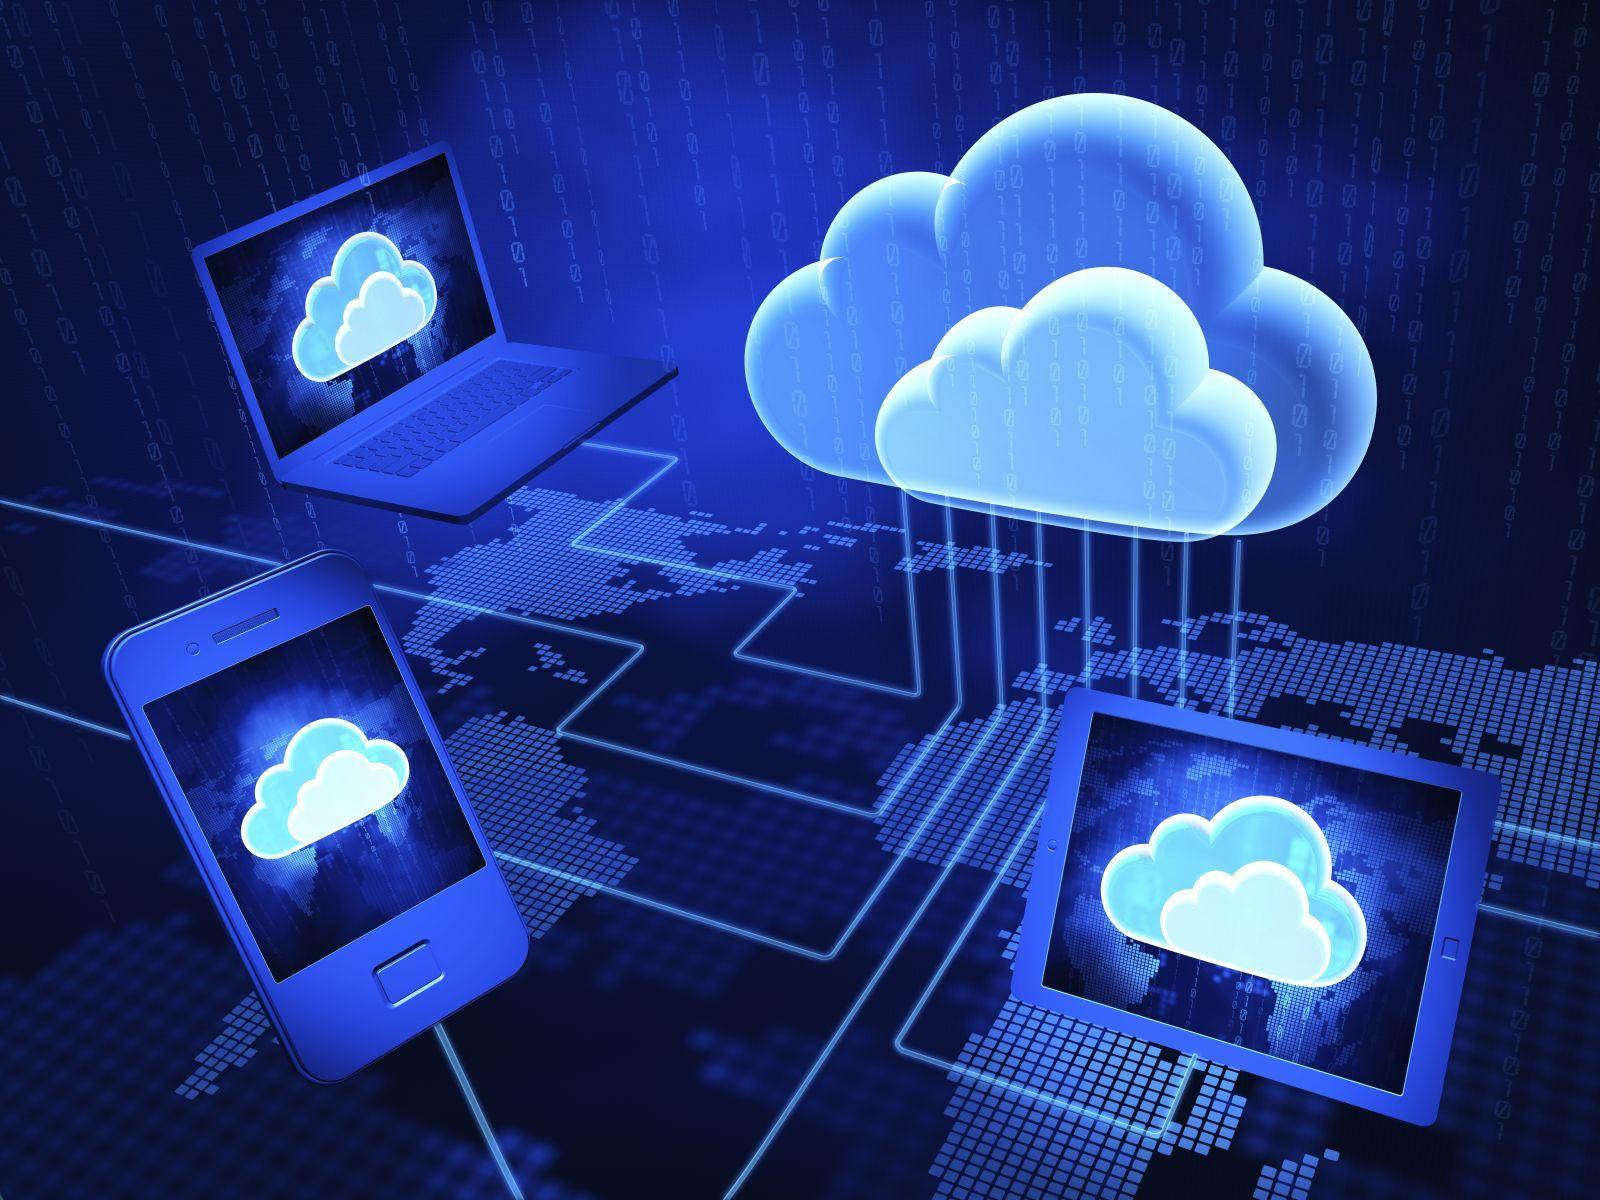 Download Cloud Computing Wallpaper Gallery. Cloud computing services, Cloud computing, Cloud computing companies